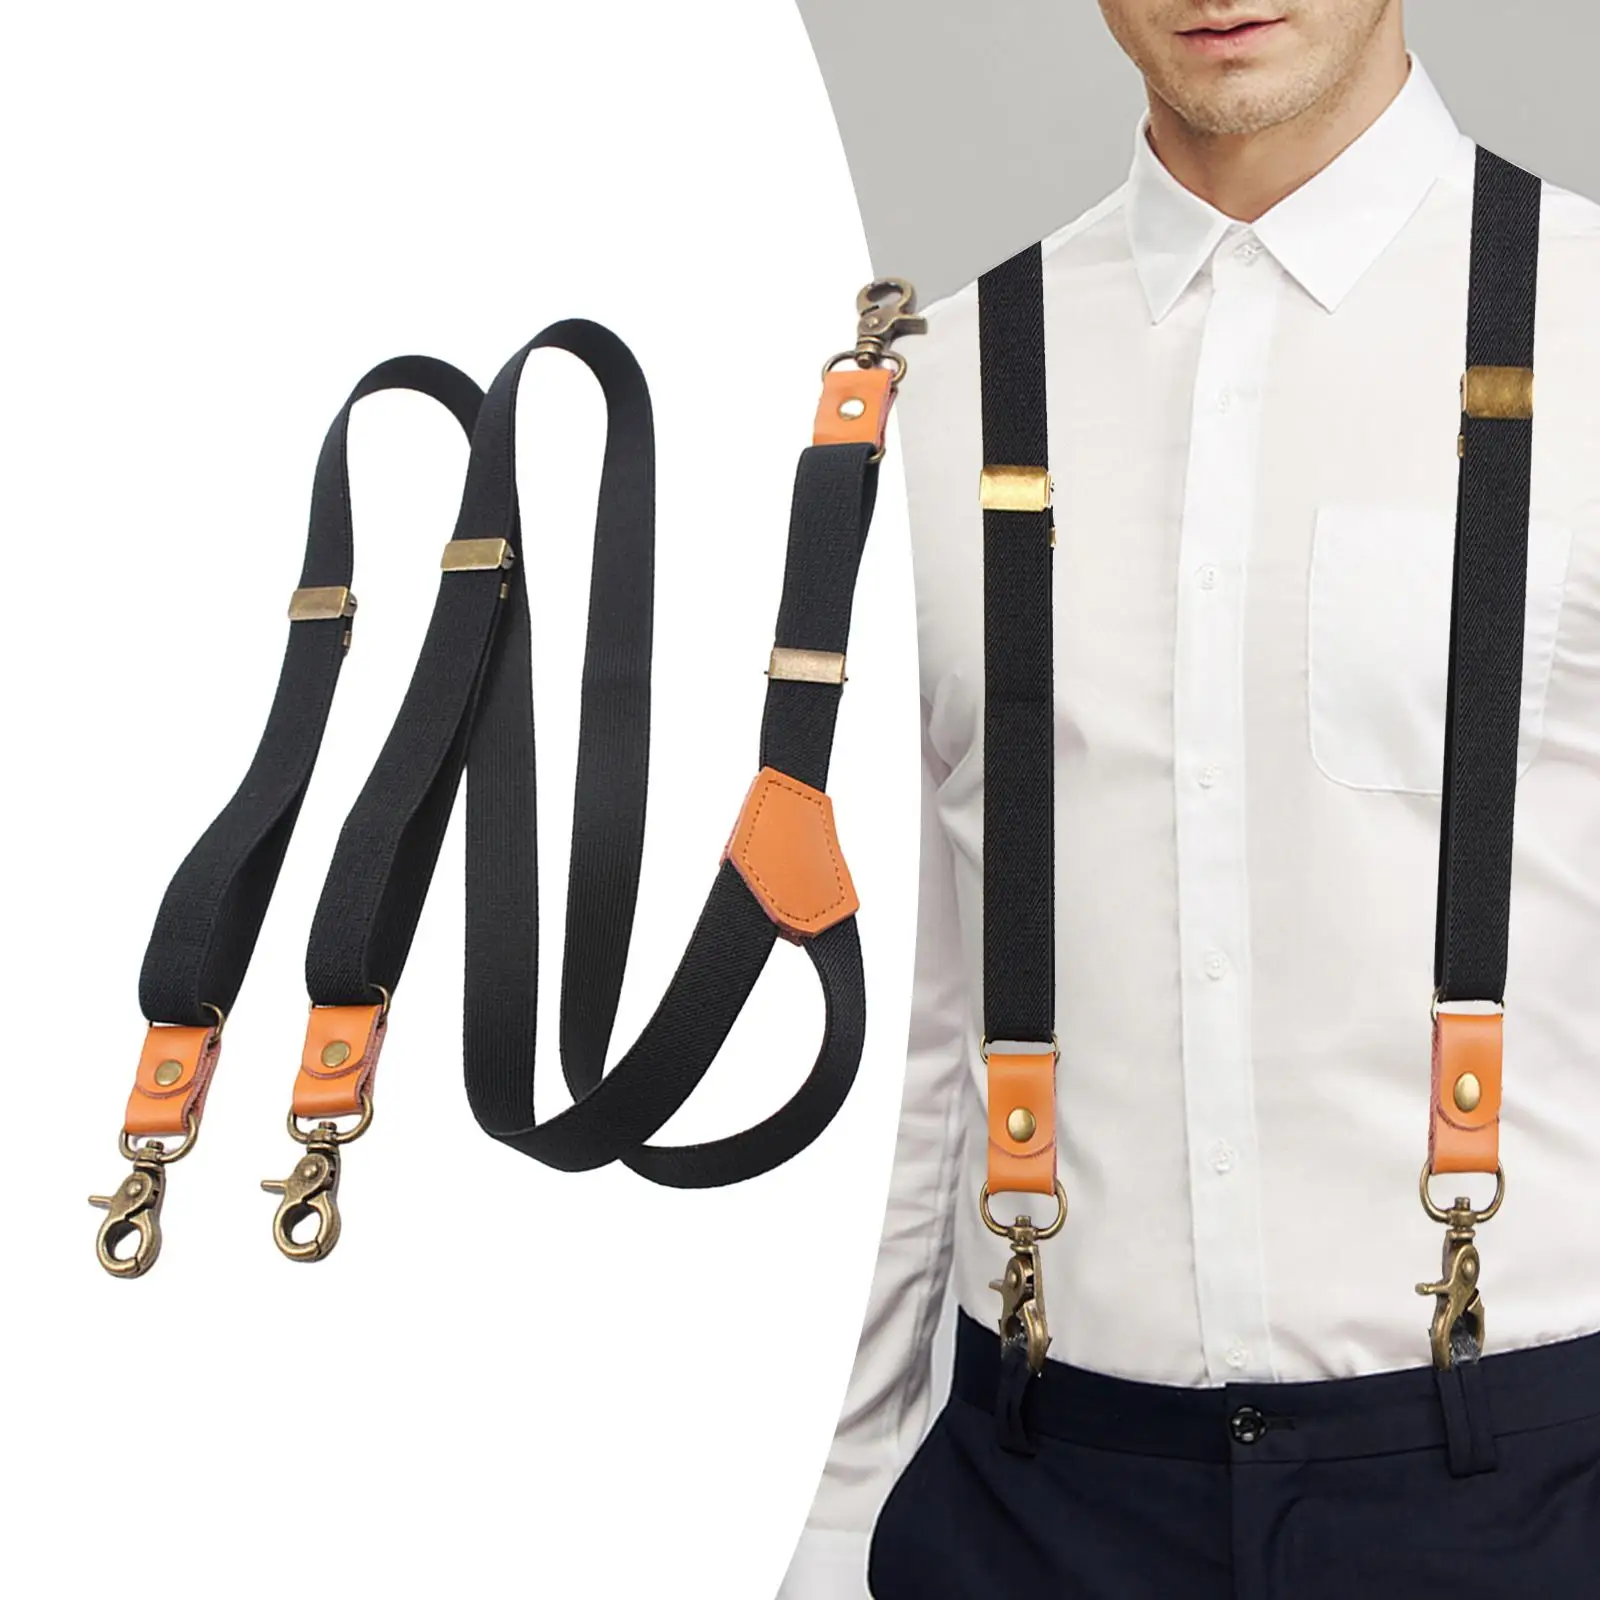 Men`s Suspenders Y Back Elastic Straps Casual Hooks Adjustable Fashion Adjustable Braces Belt Loops Braces Mens Womens for Work